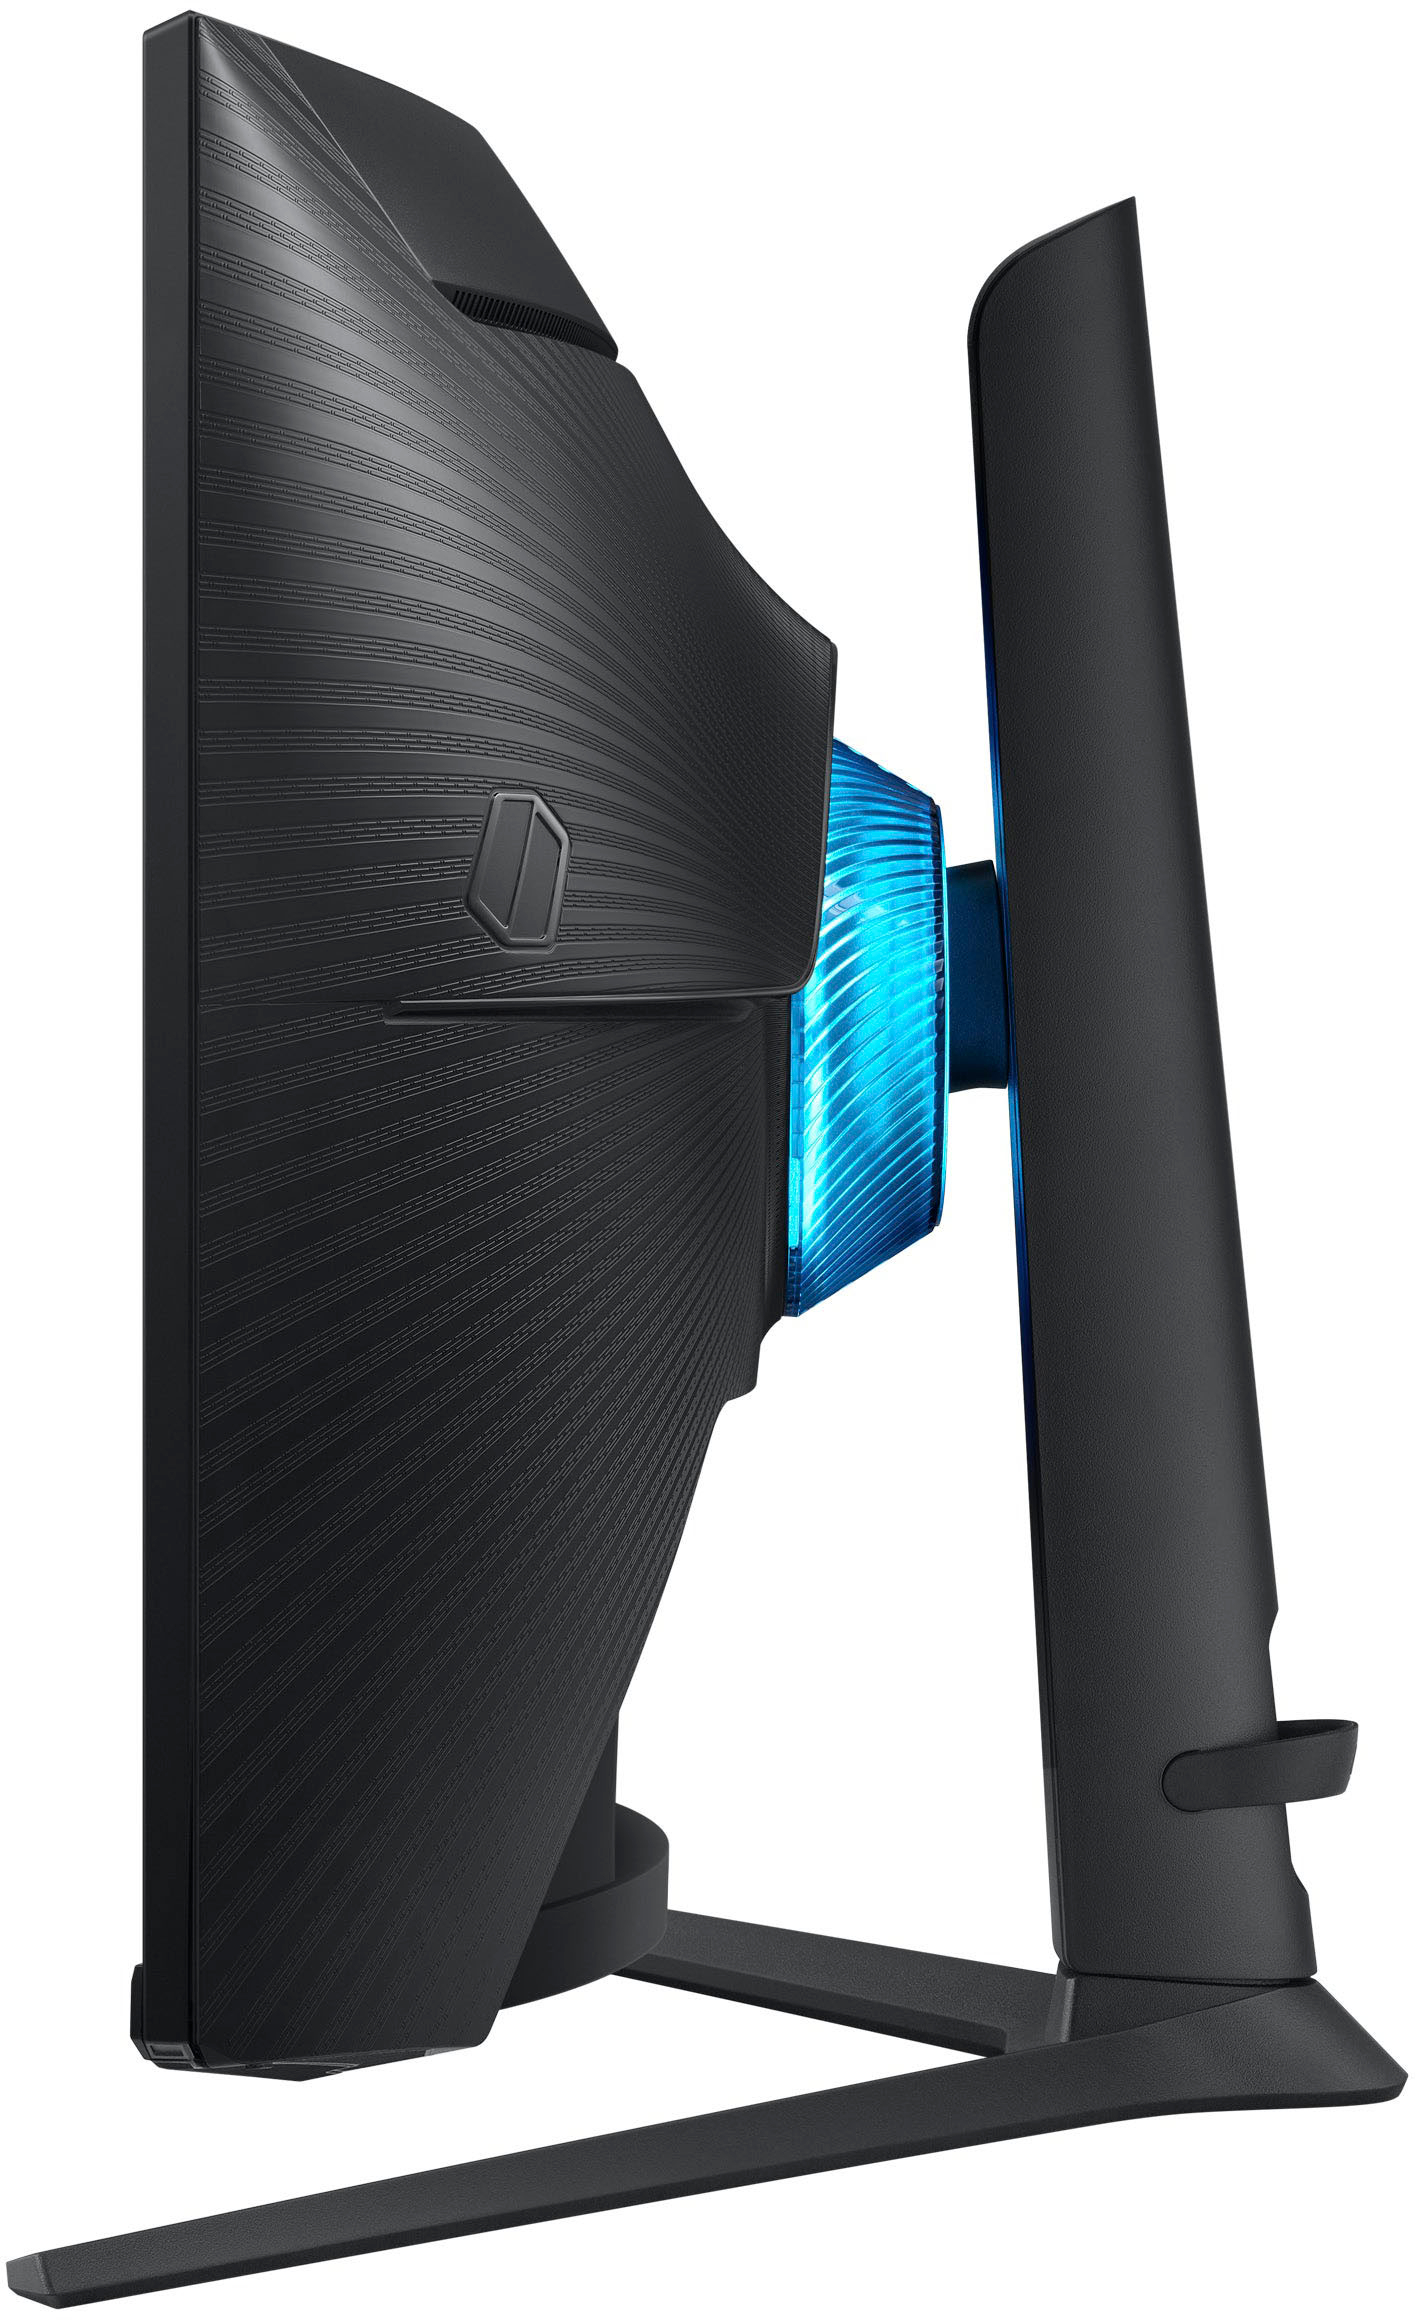 Samsung Odyssey G6 27” Curved QHD FreeSync Premium Pro Smart 240Hz 1ms  Gaming Monitor with HDR600 (DisplayPort, HDMI, USB 3.0) Black  LS27BG652ENXGO - Best Buy